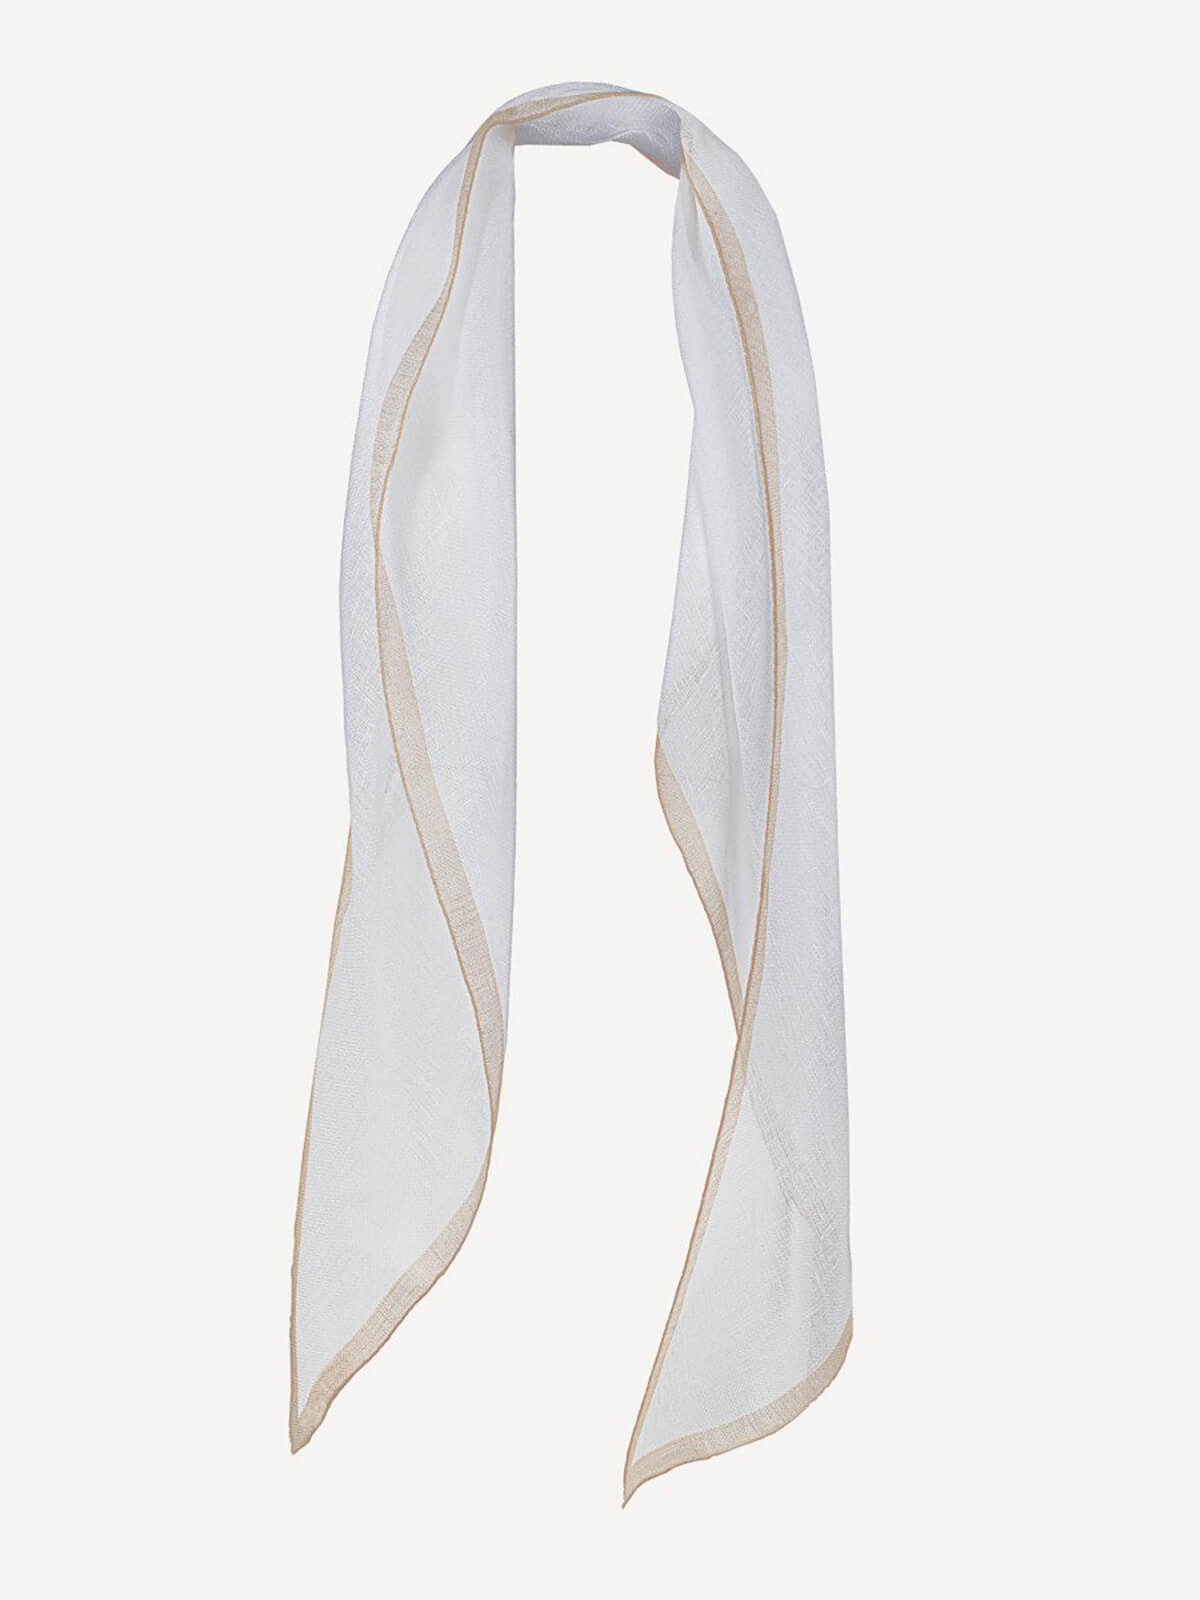 Rhombus Linen Scarf for women 100% Capri white and nut linen scarf